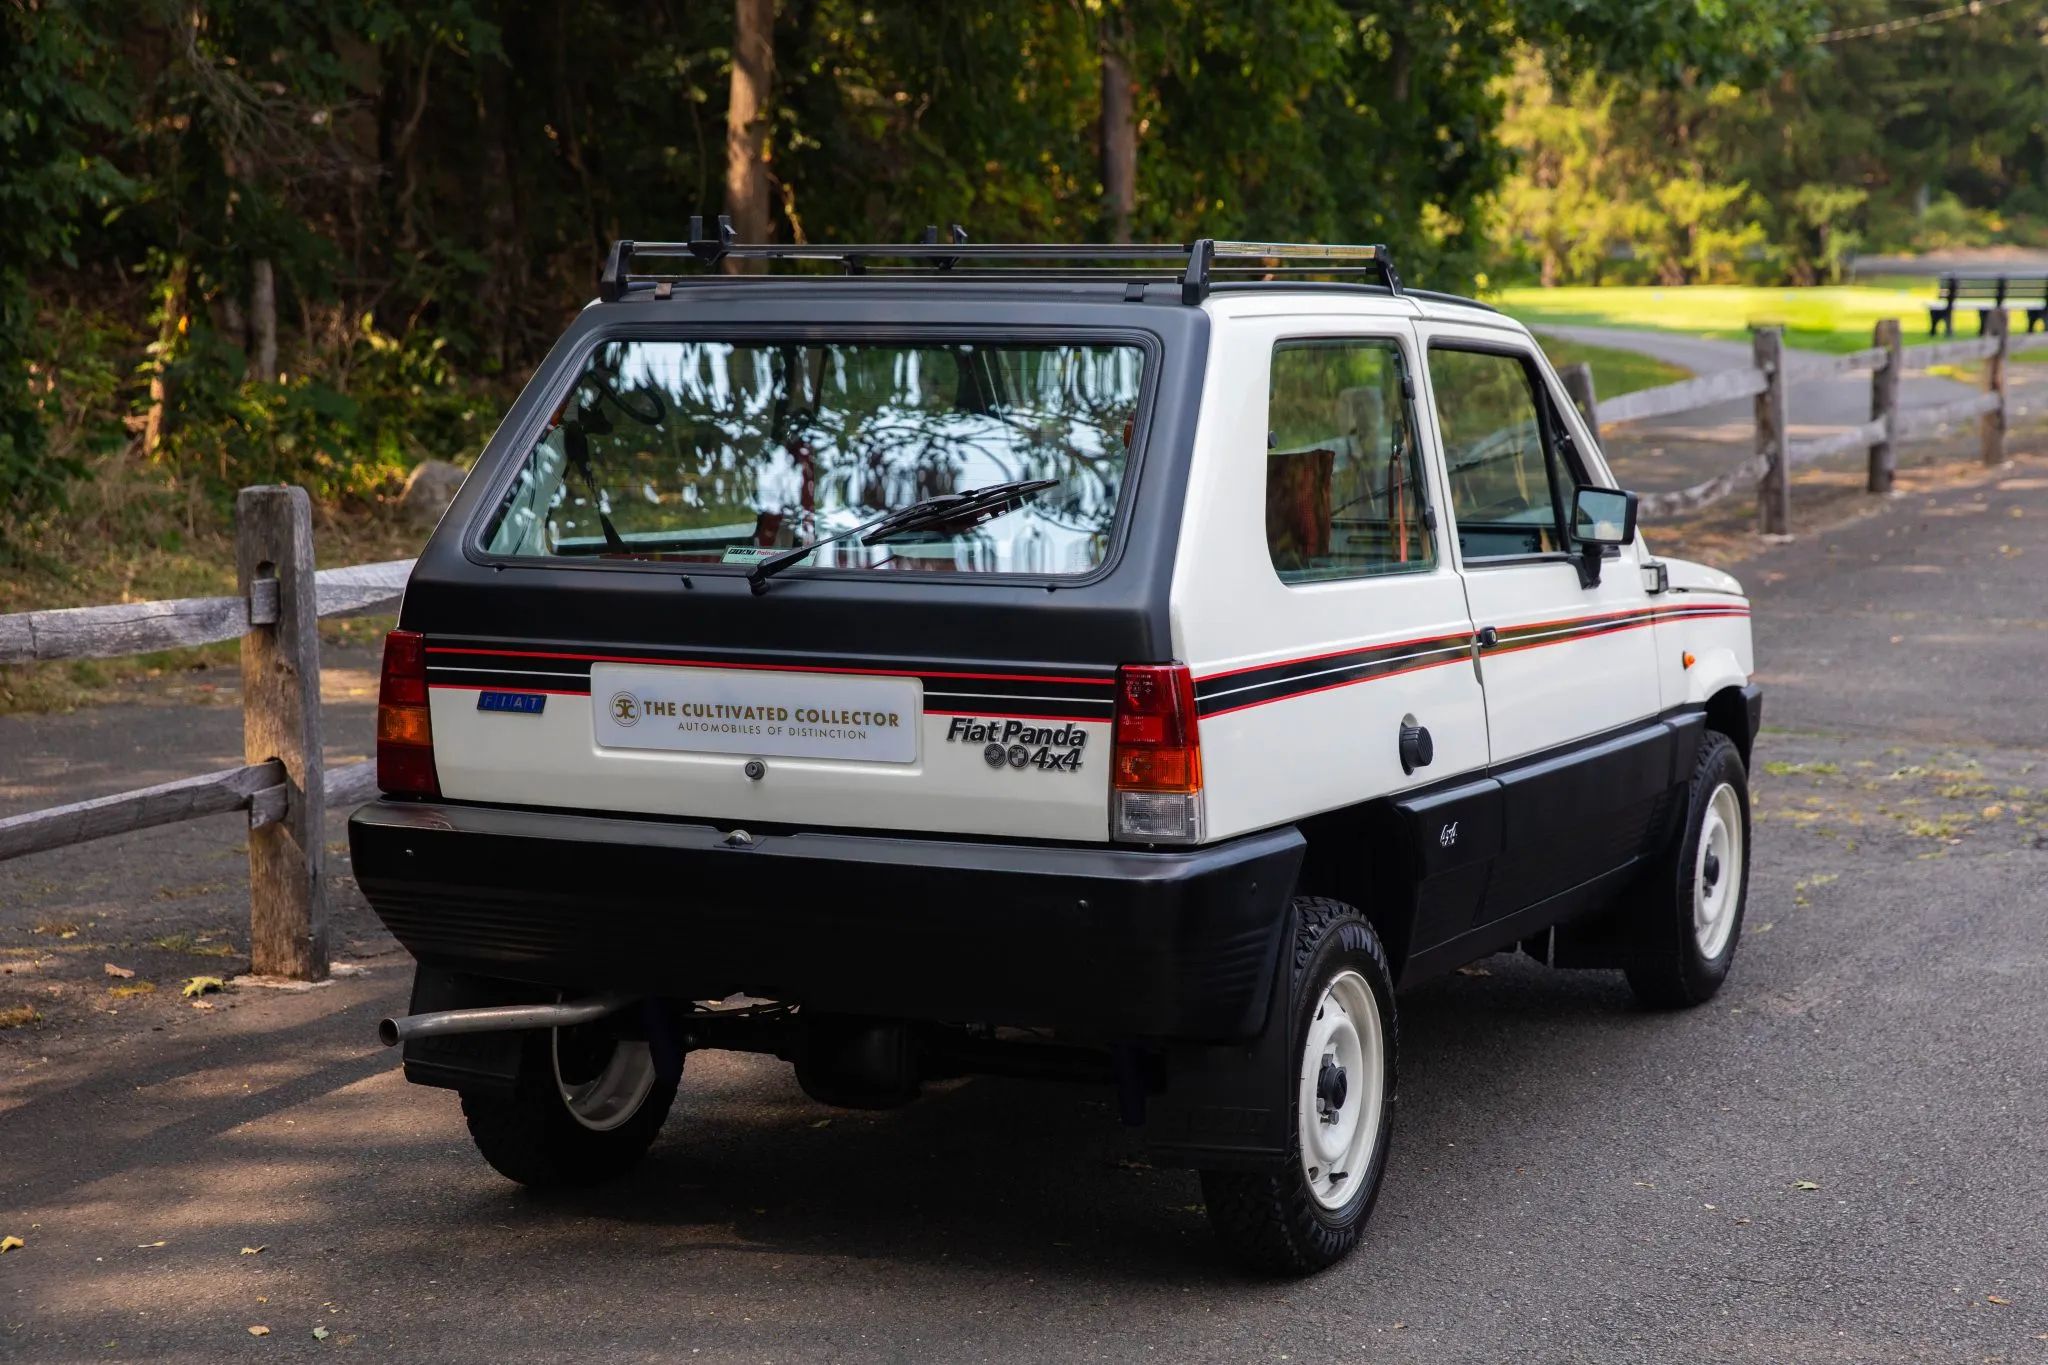 Restored 1986 Fiat Panda 4×4 Is A Cute But Rugged Italian Off-Roader